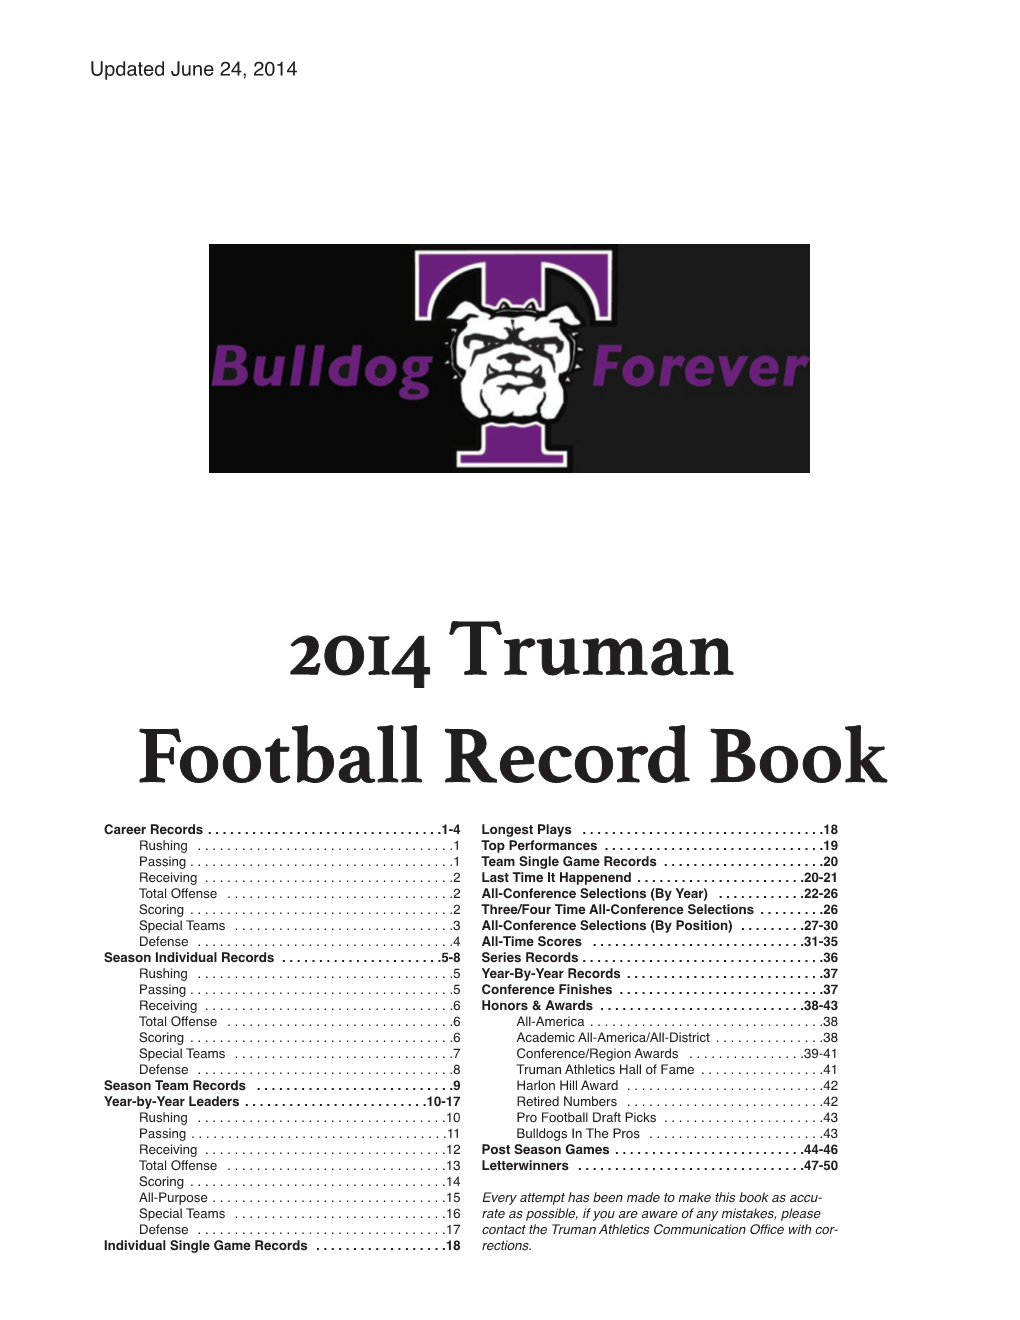 2014 Truman Football Record Book